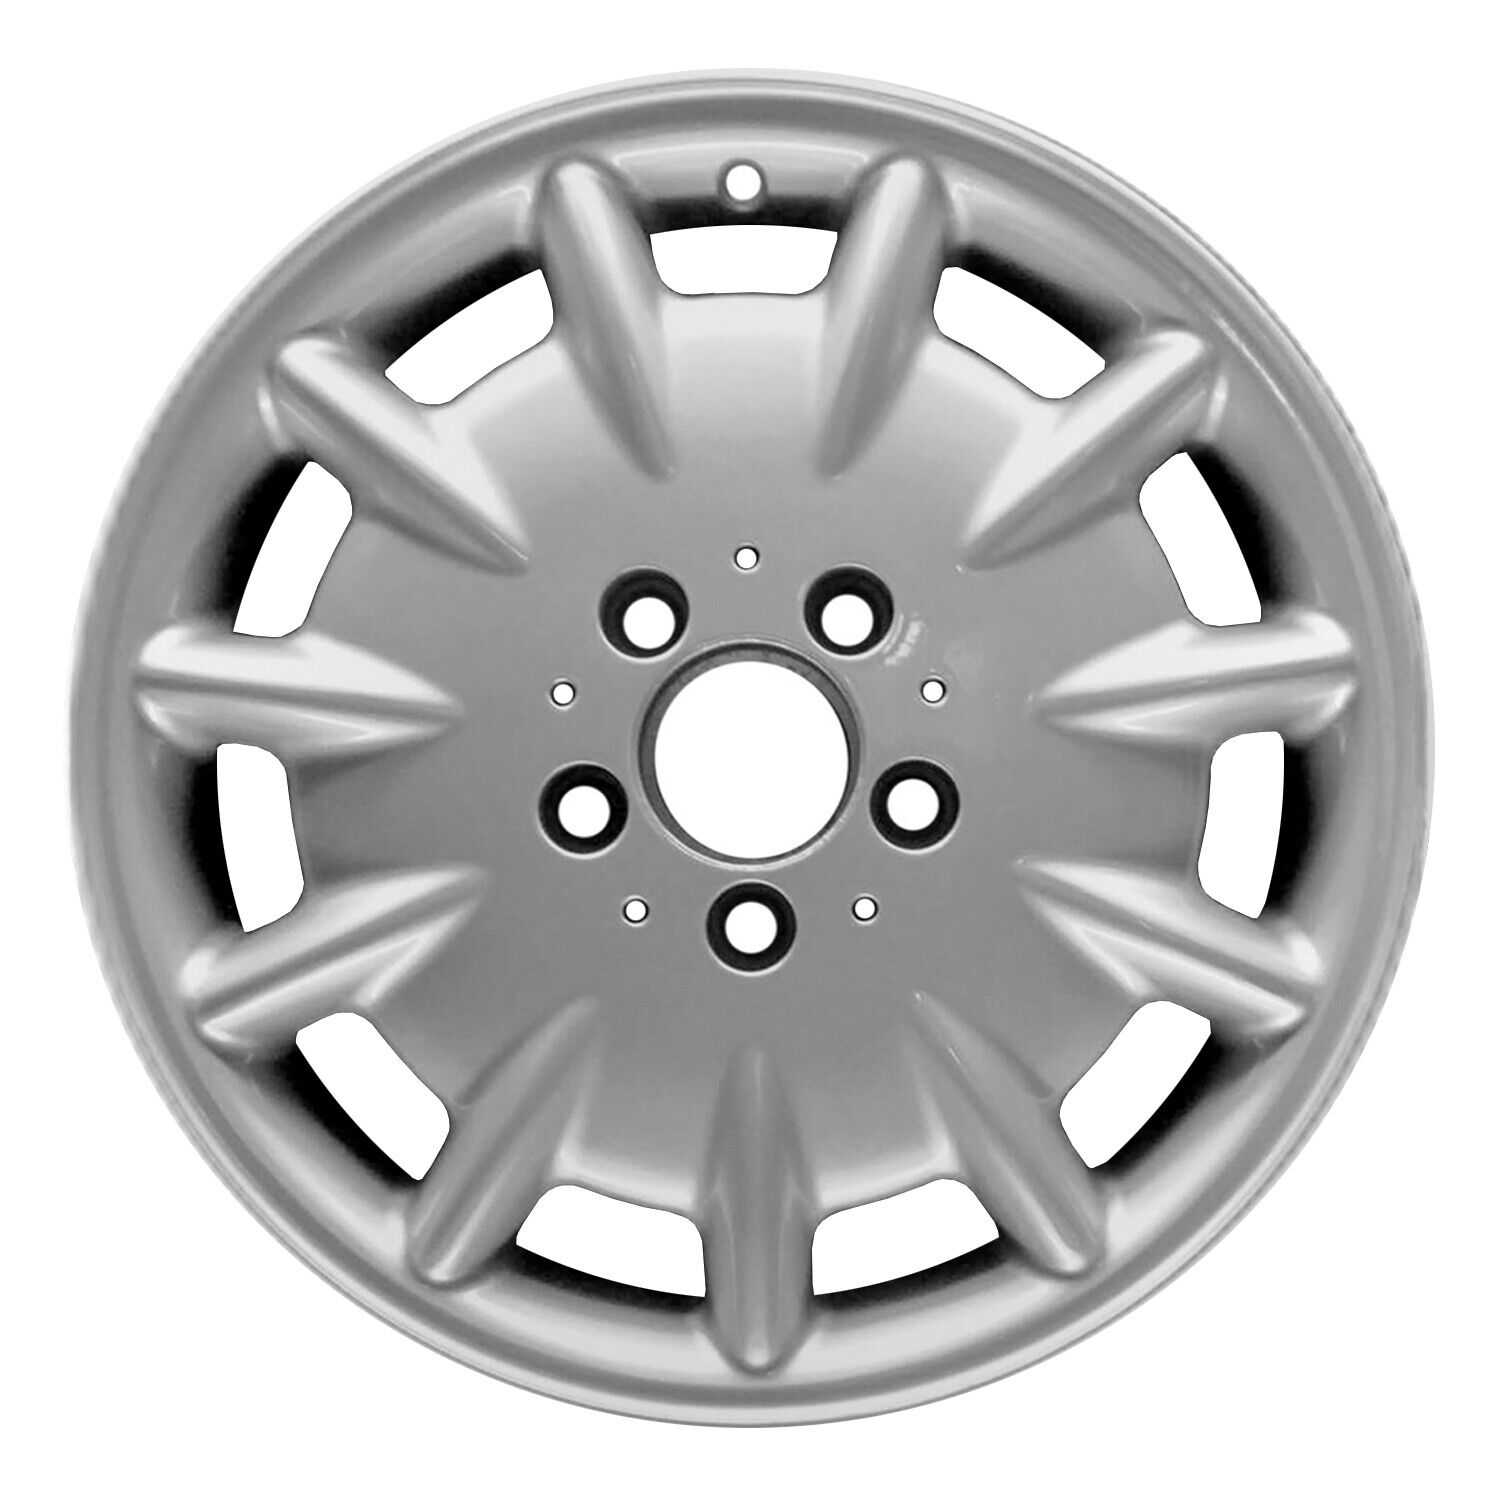 65238 Reconditioned OEM Aluminum Wheel 16x7.5 fits 2000-2003 Mercedes E320